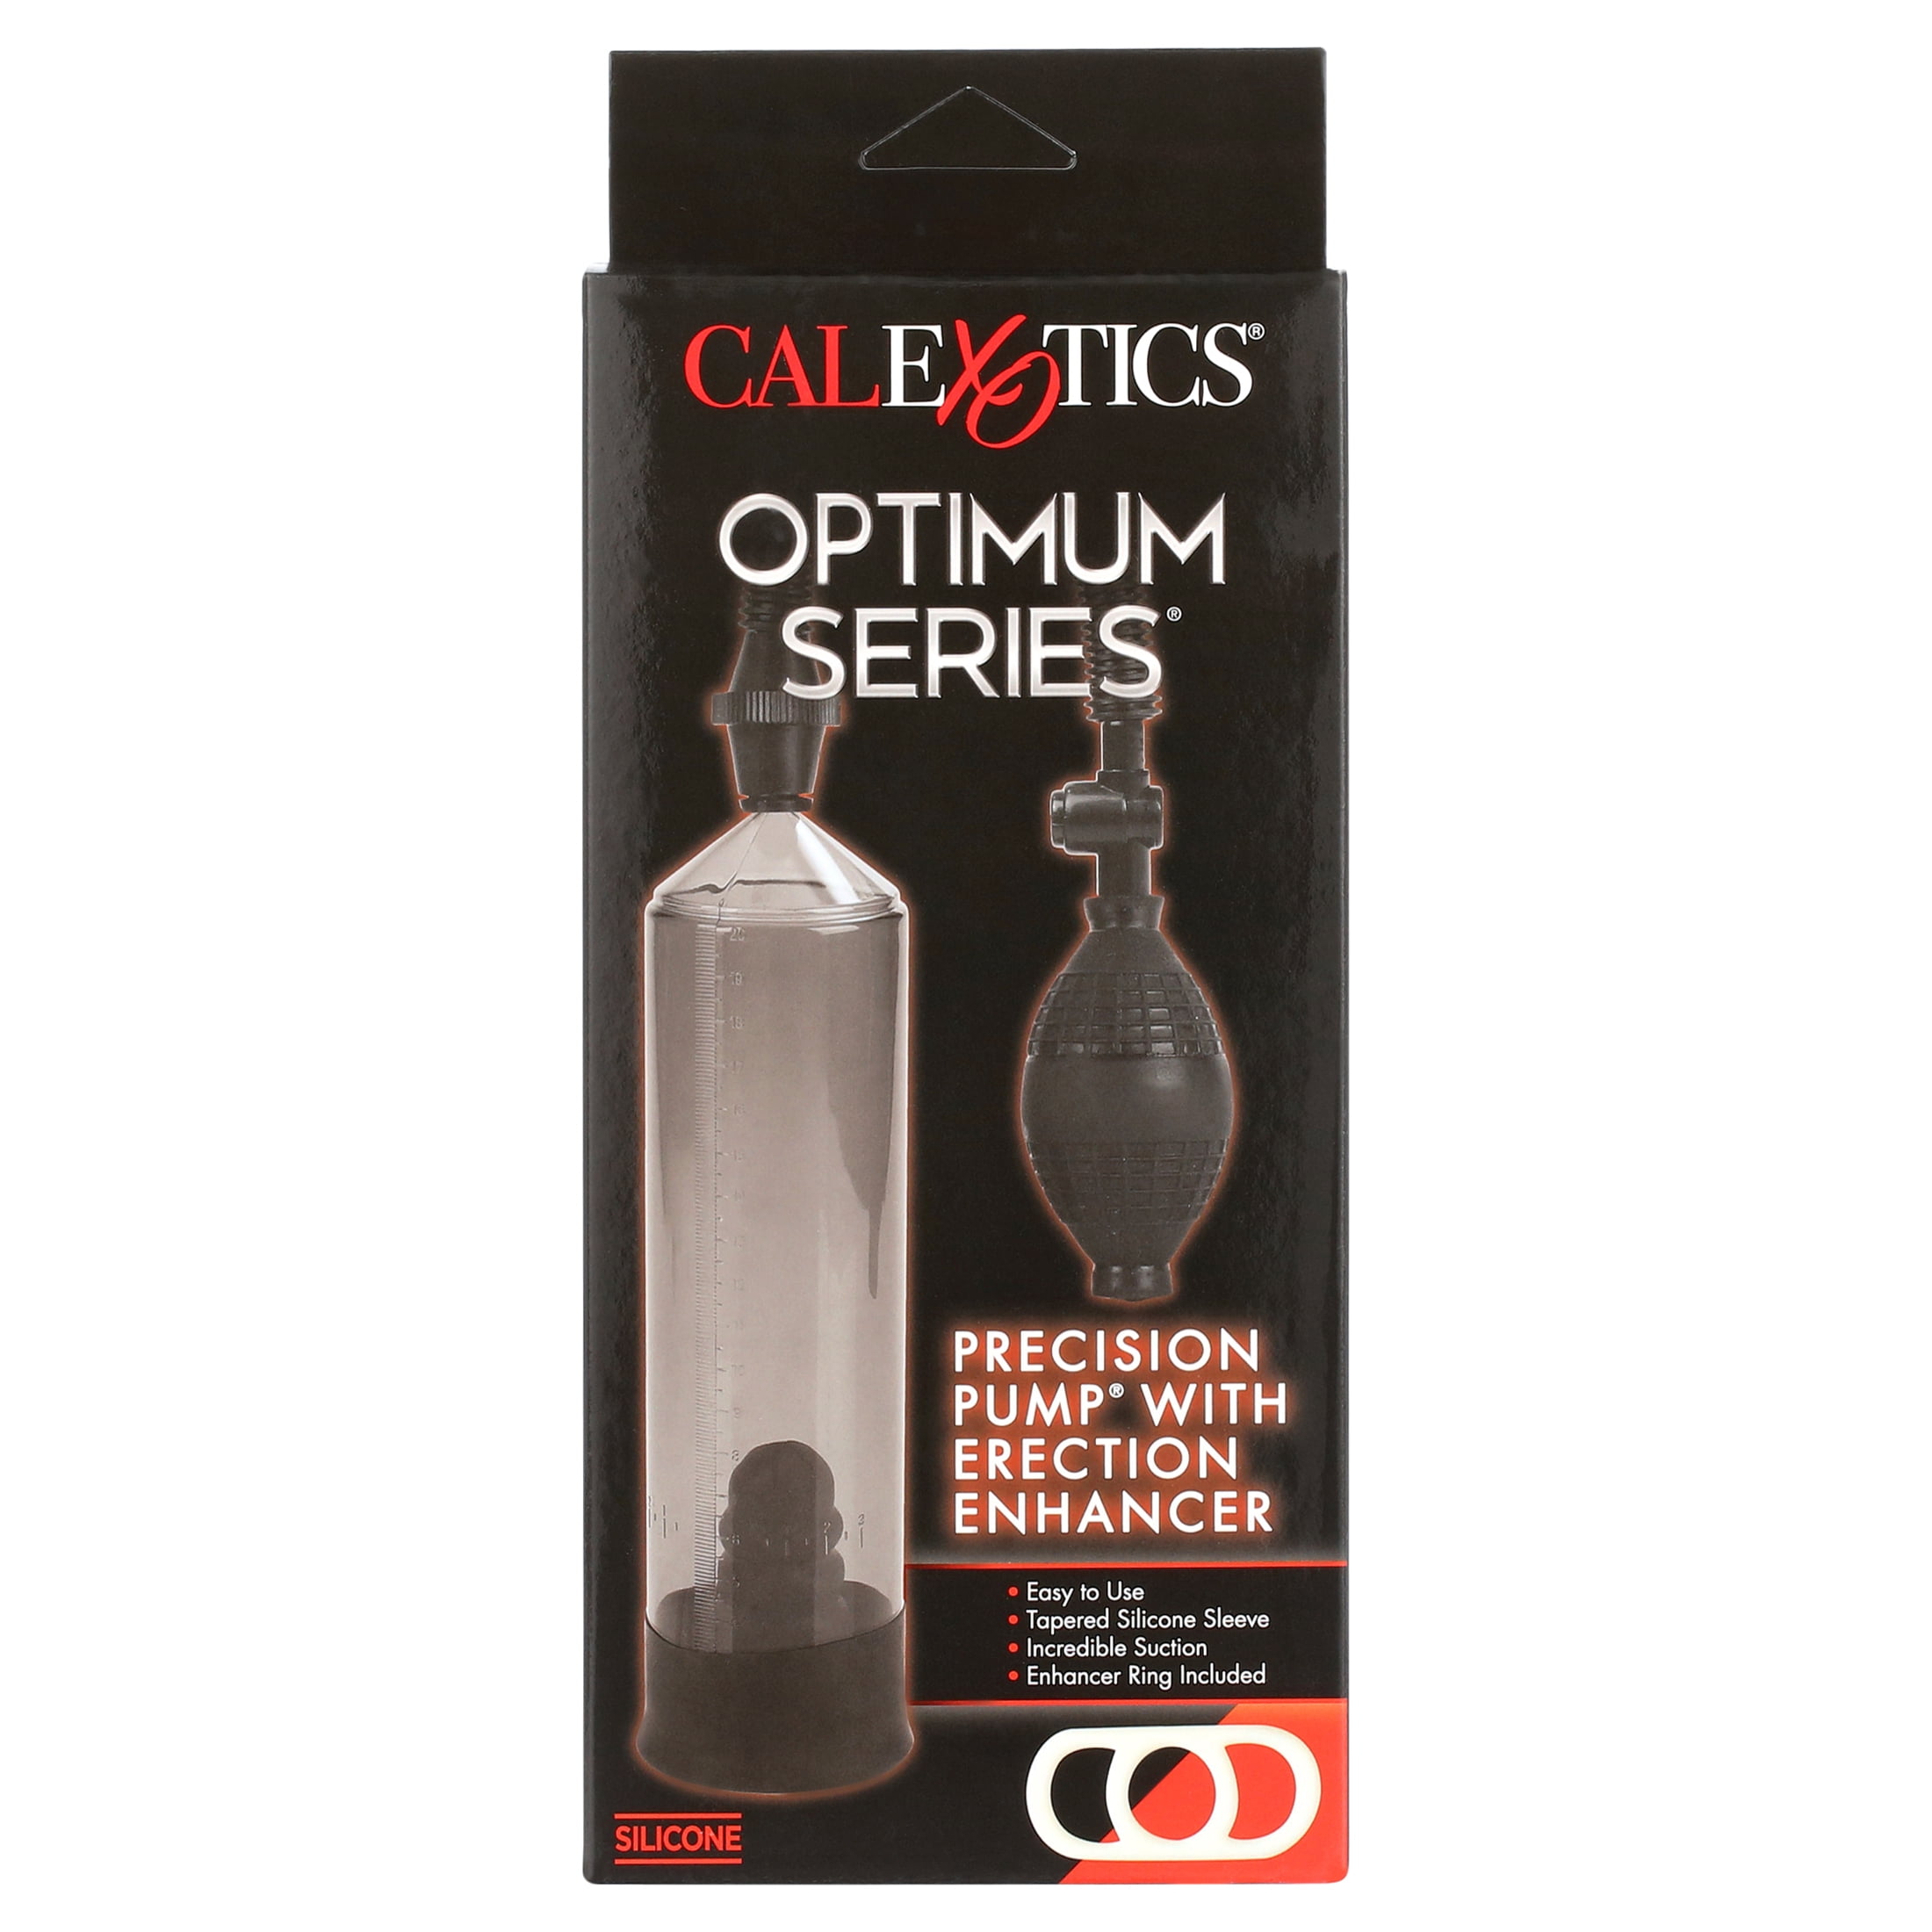 CalExotics Precision Penis Pump With Erection Enhancer photo image